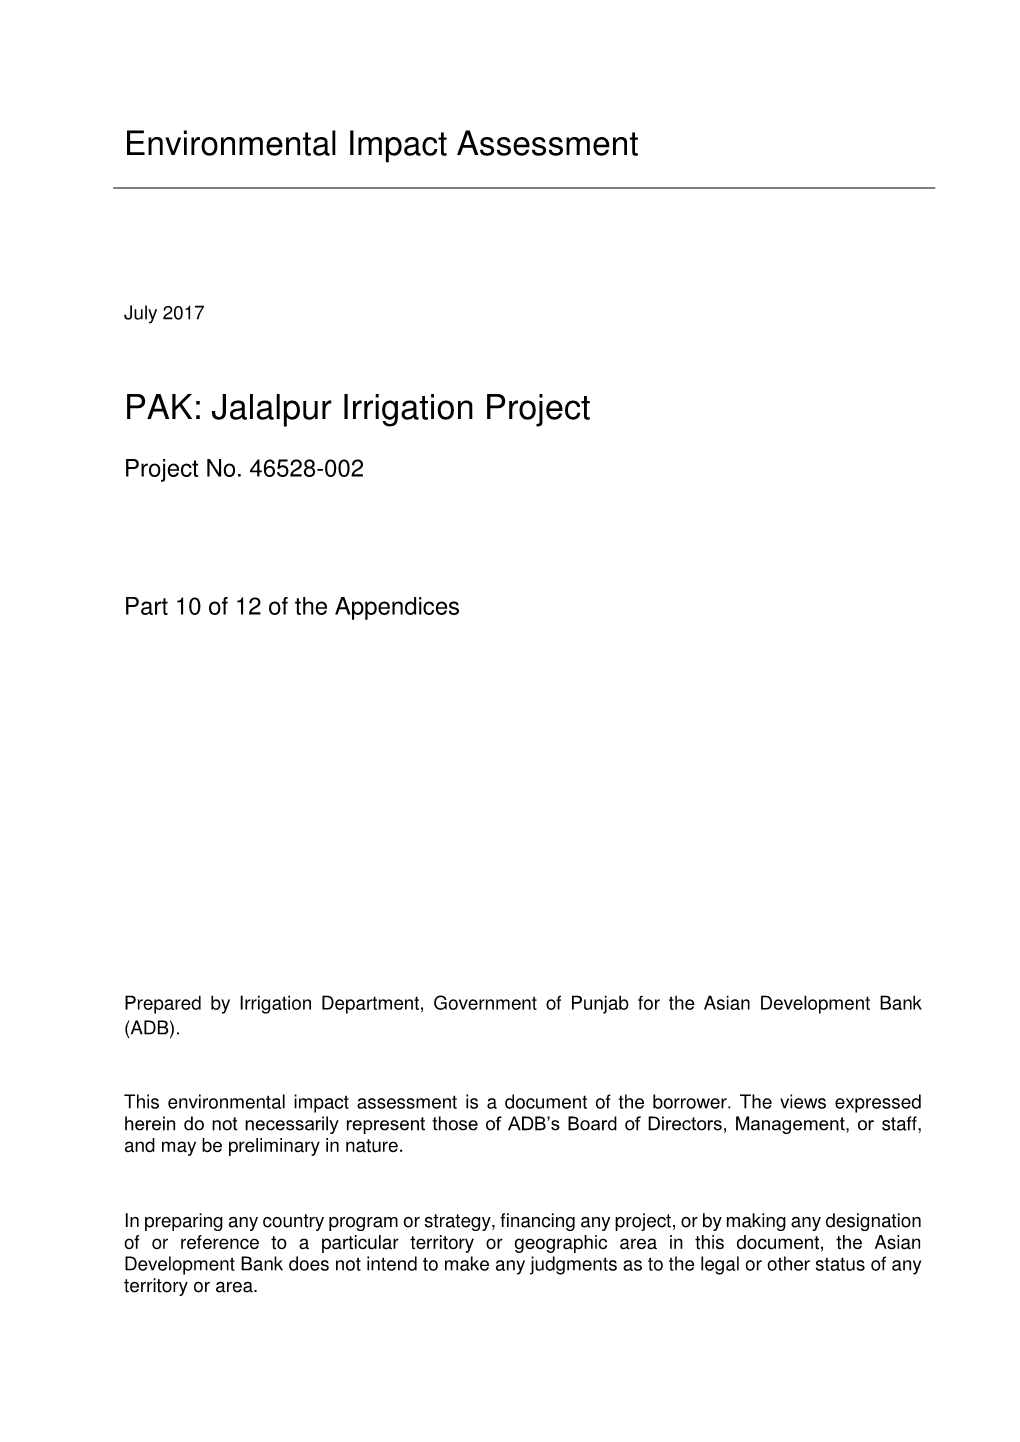 PAK: Jalalpur Irrigation Project